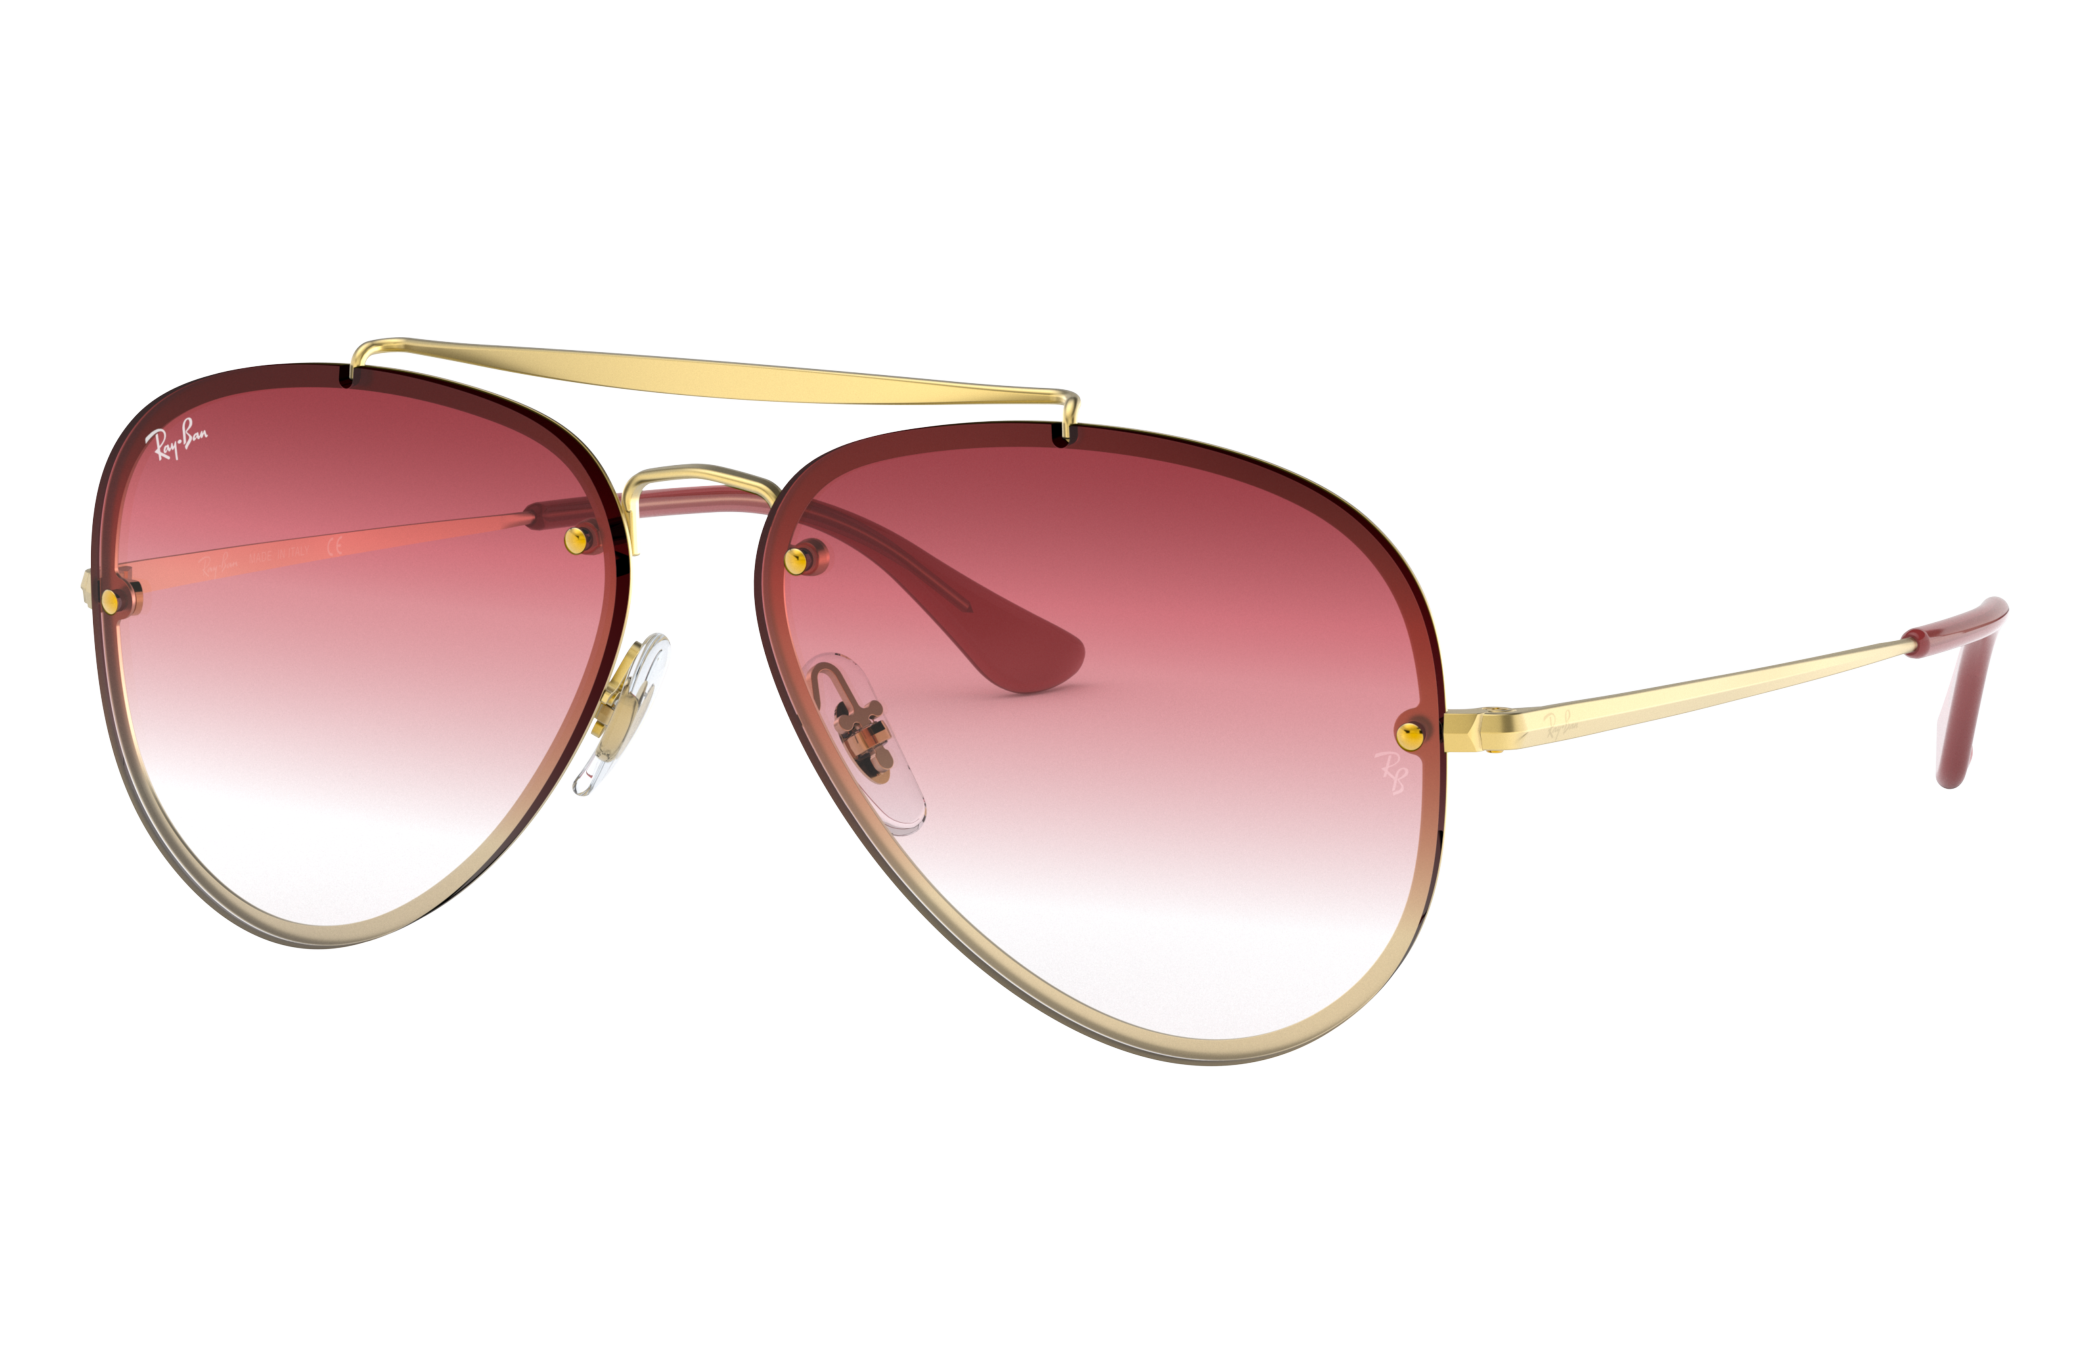 Discriminate preview Porter Blaze Aviator Sunglasses in Gold and Dark Red | Ray-Ban®